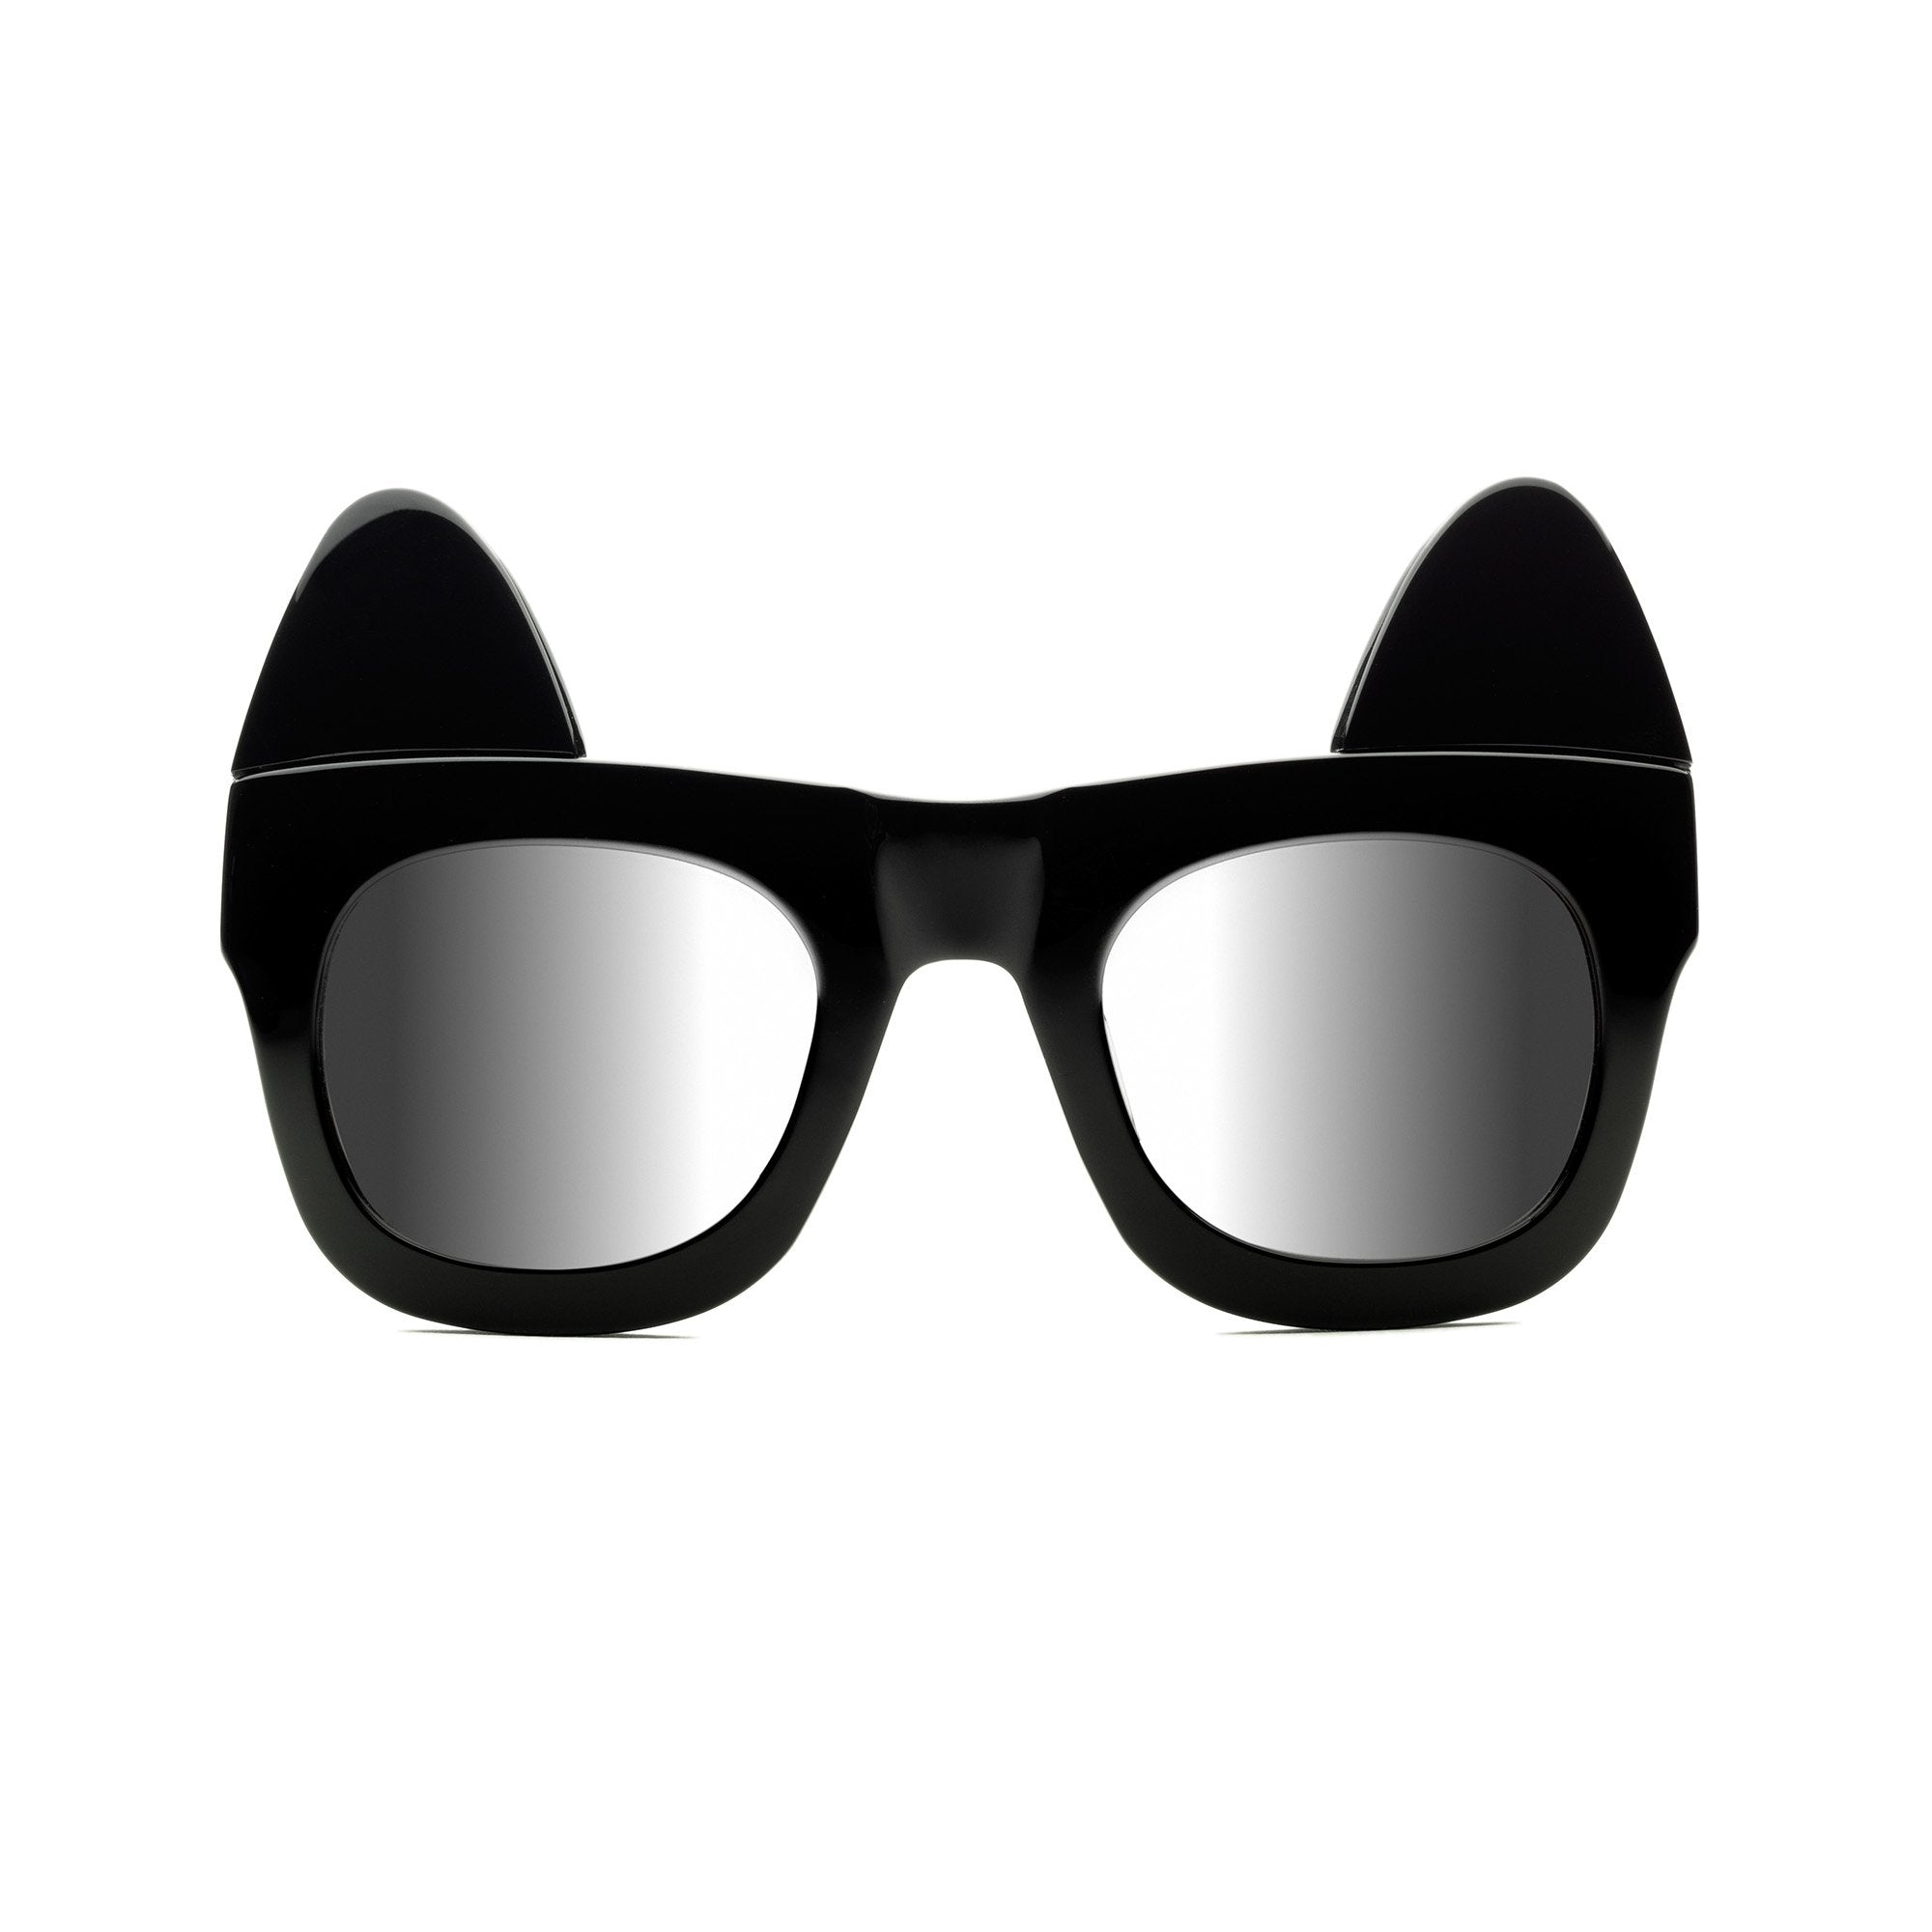 Napszemüveg // Mister tee LIT Laser Sunglasses black